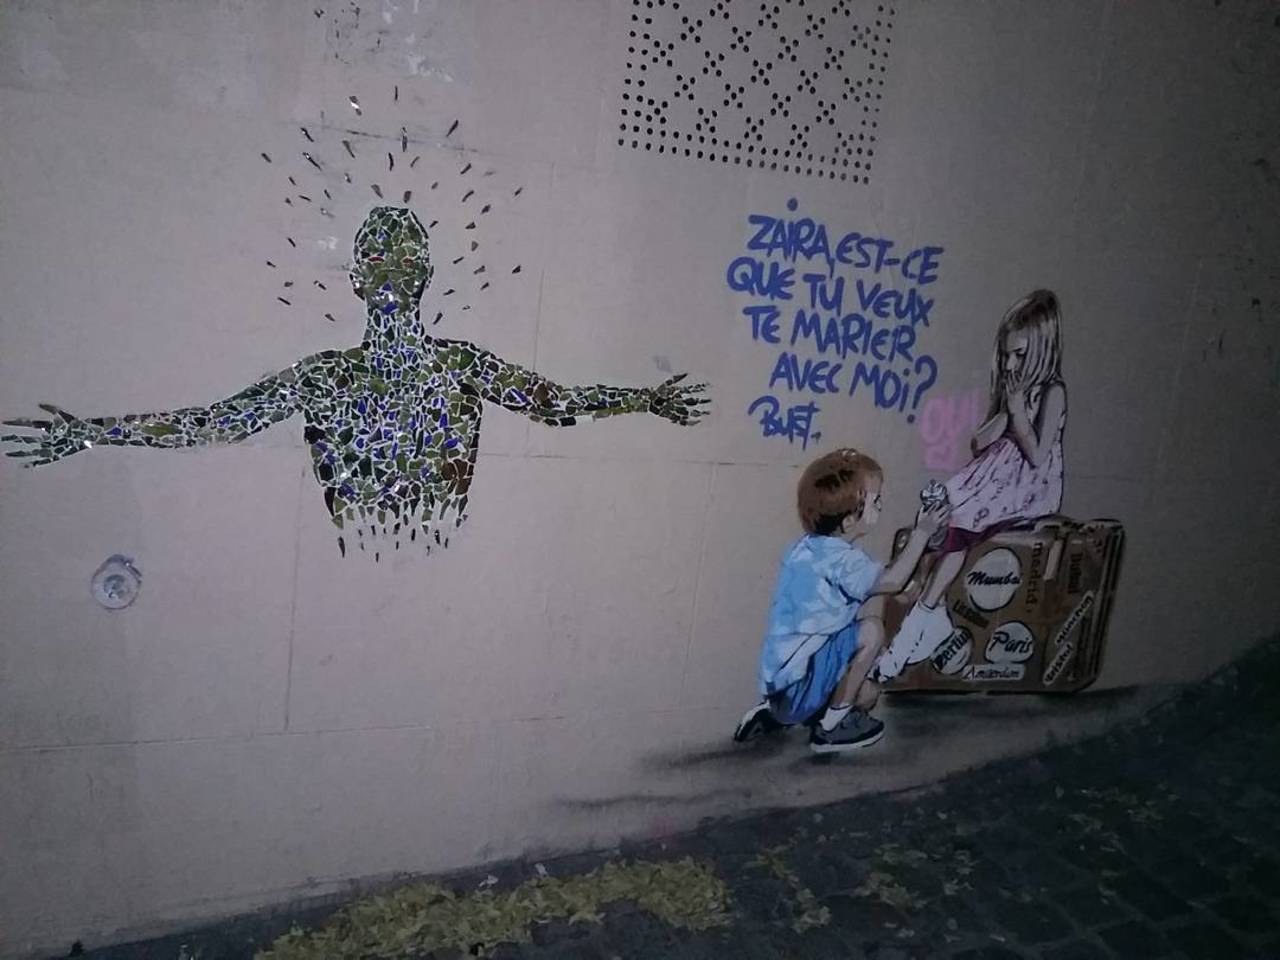 #Paris #graffiti photo by @tangereena http://ift.tt/1R9HgXW #StreetArt https://t.co/64Iiba2kb7